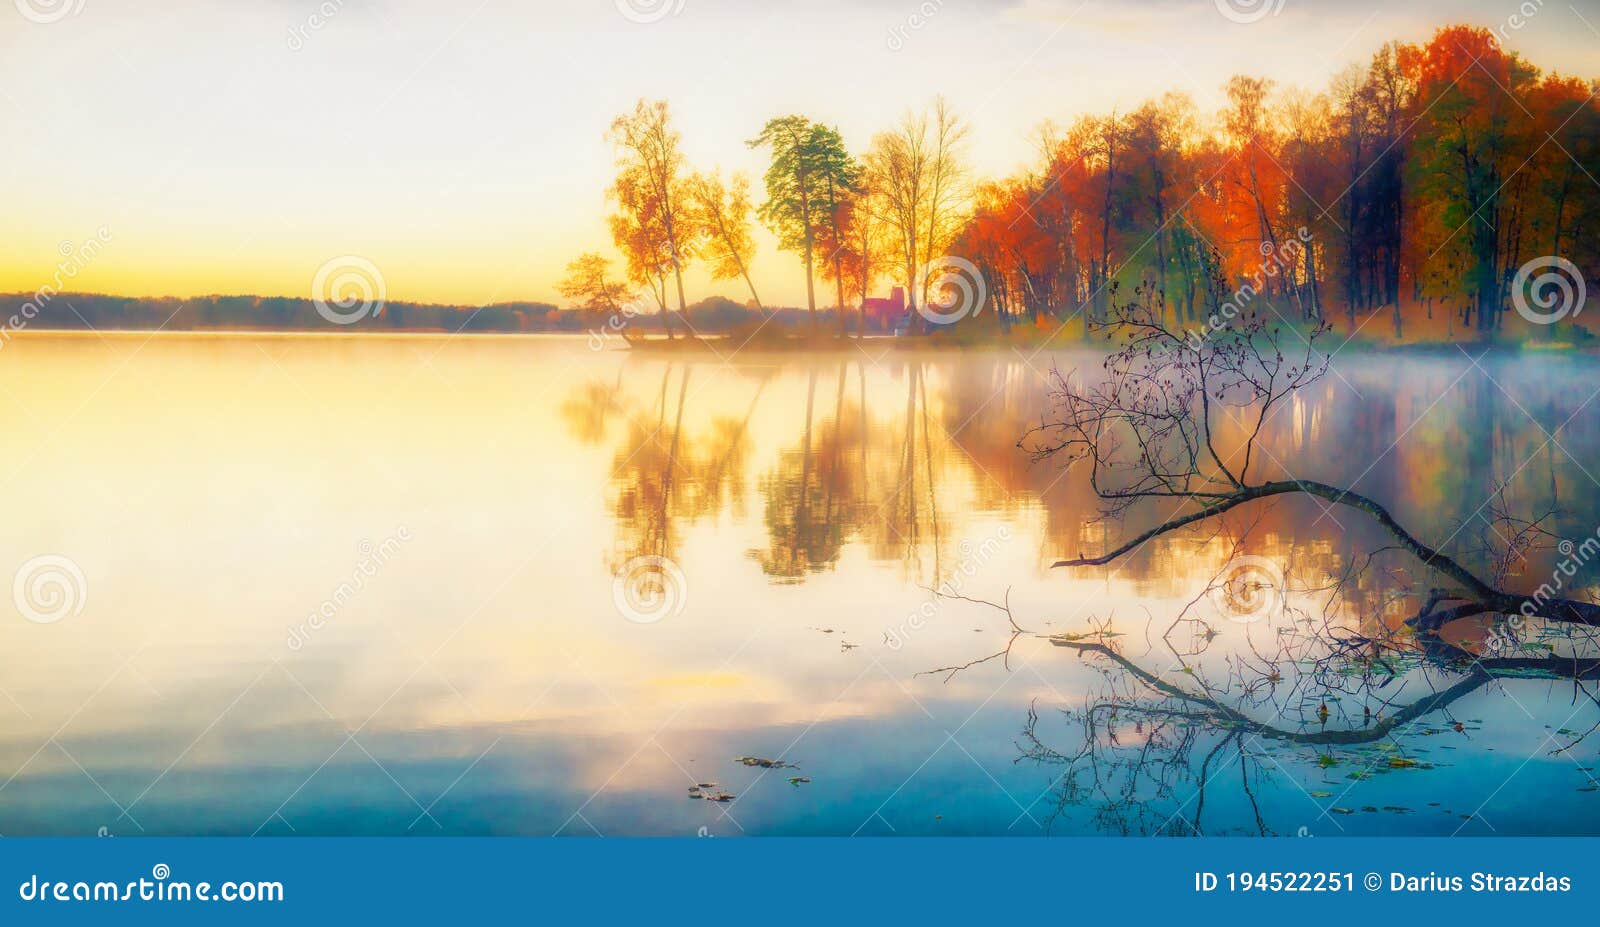 Scenic Beautiful Fall Autumn Lake Landscape Scenery at Sundown Stock Image  - Image of autumn, october: 194522251